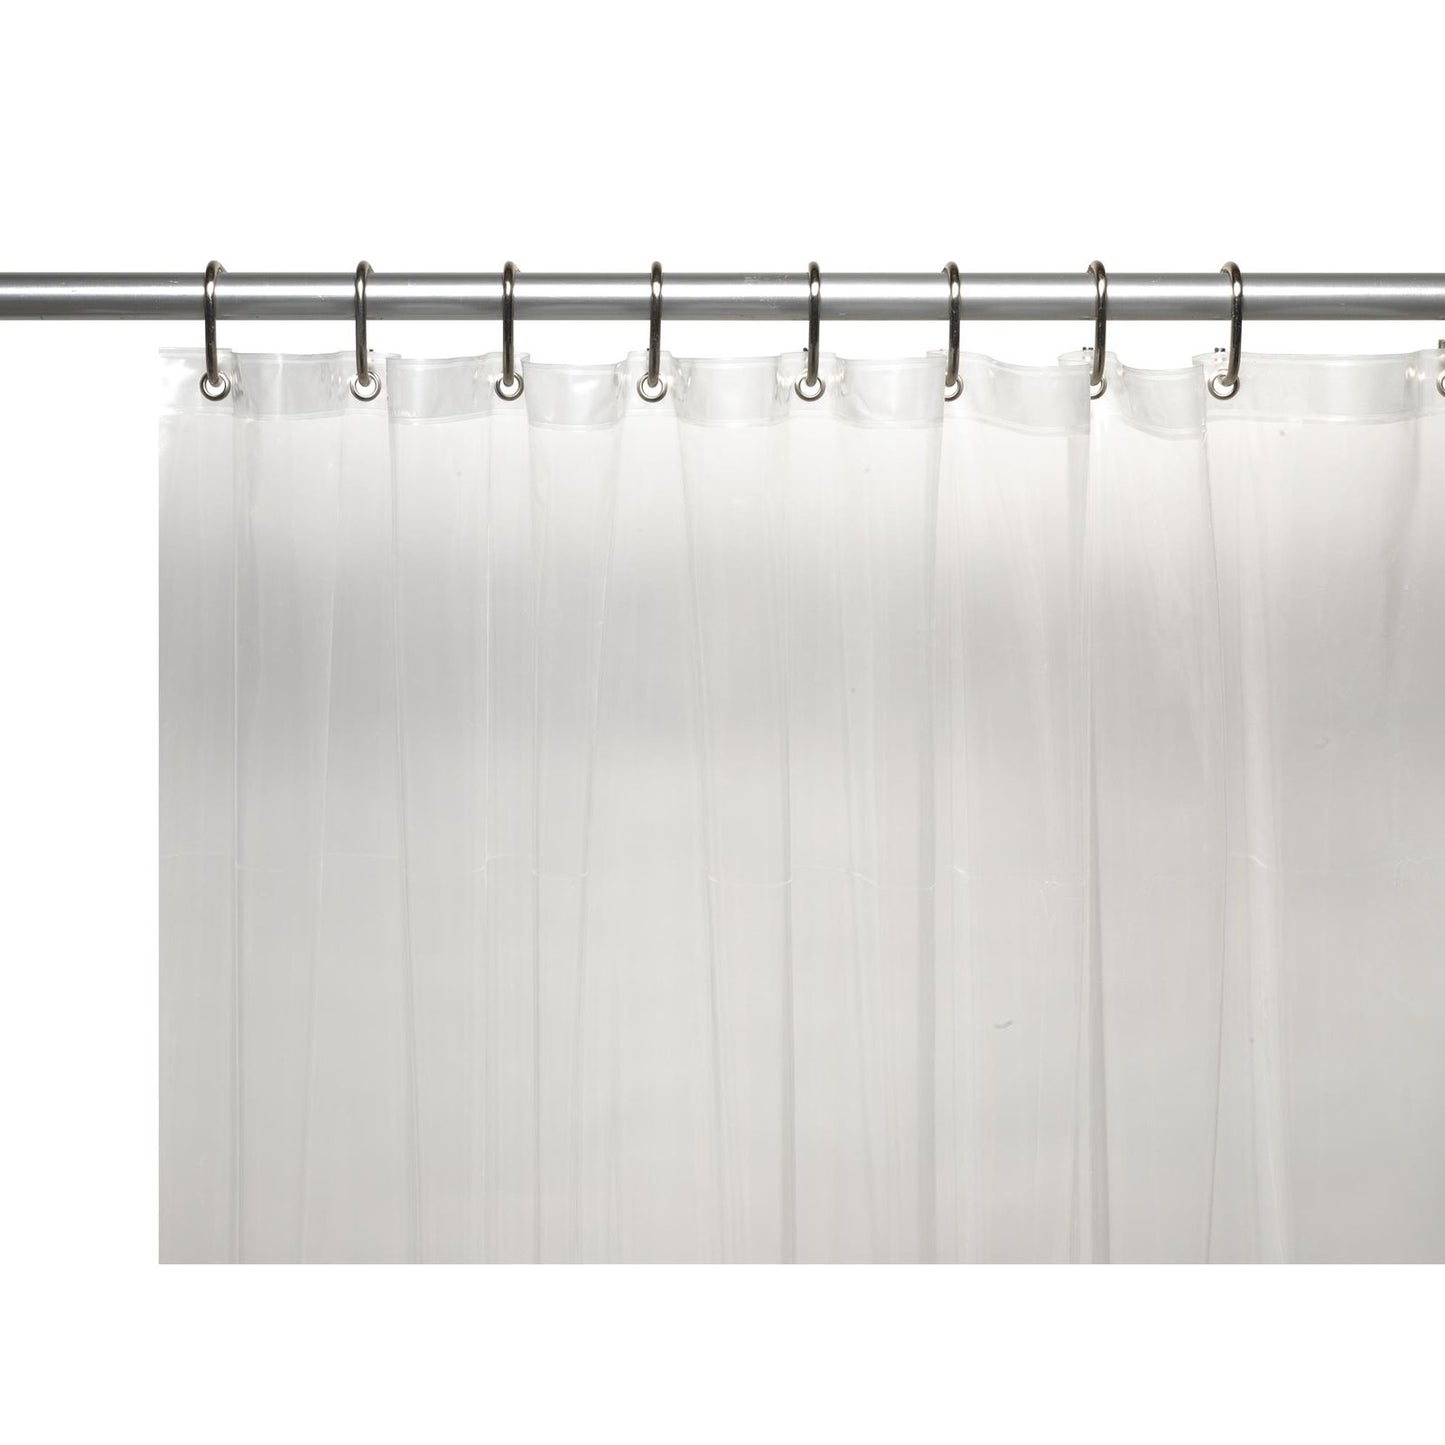 48 pack (1 case) 3 gauge vinyl shower curtain liners 70x72 @ $2.99 each